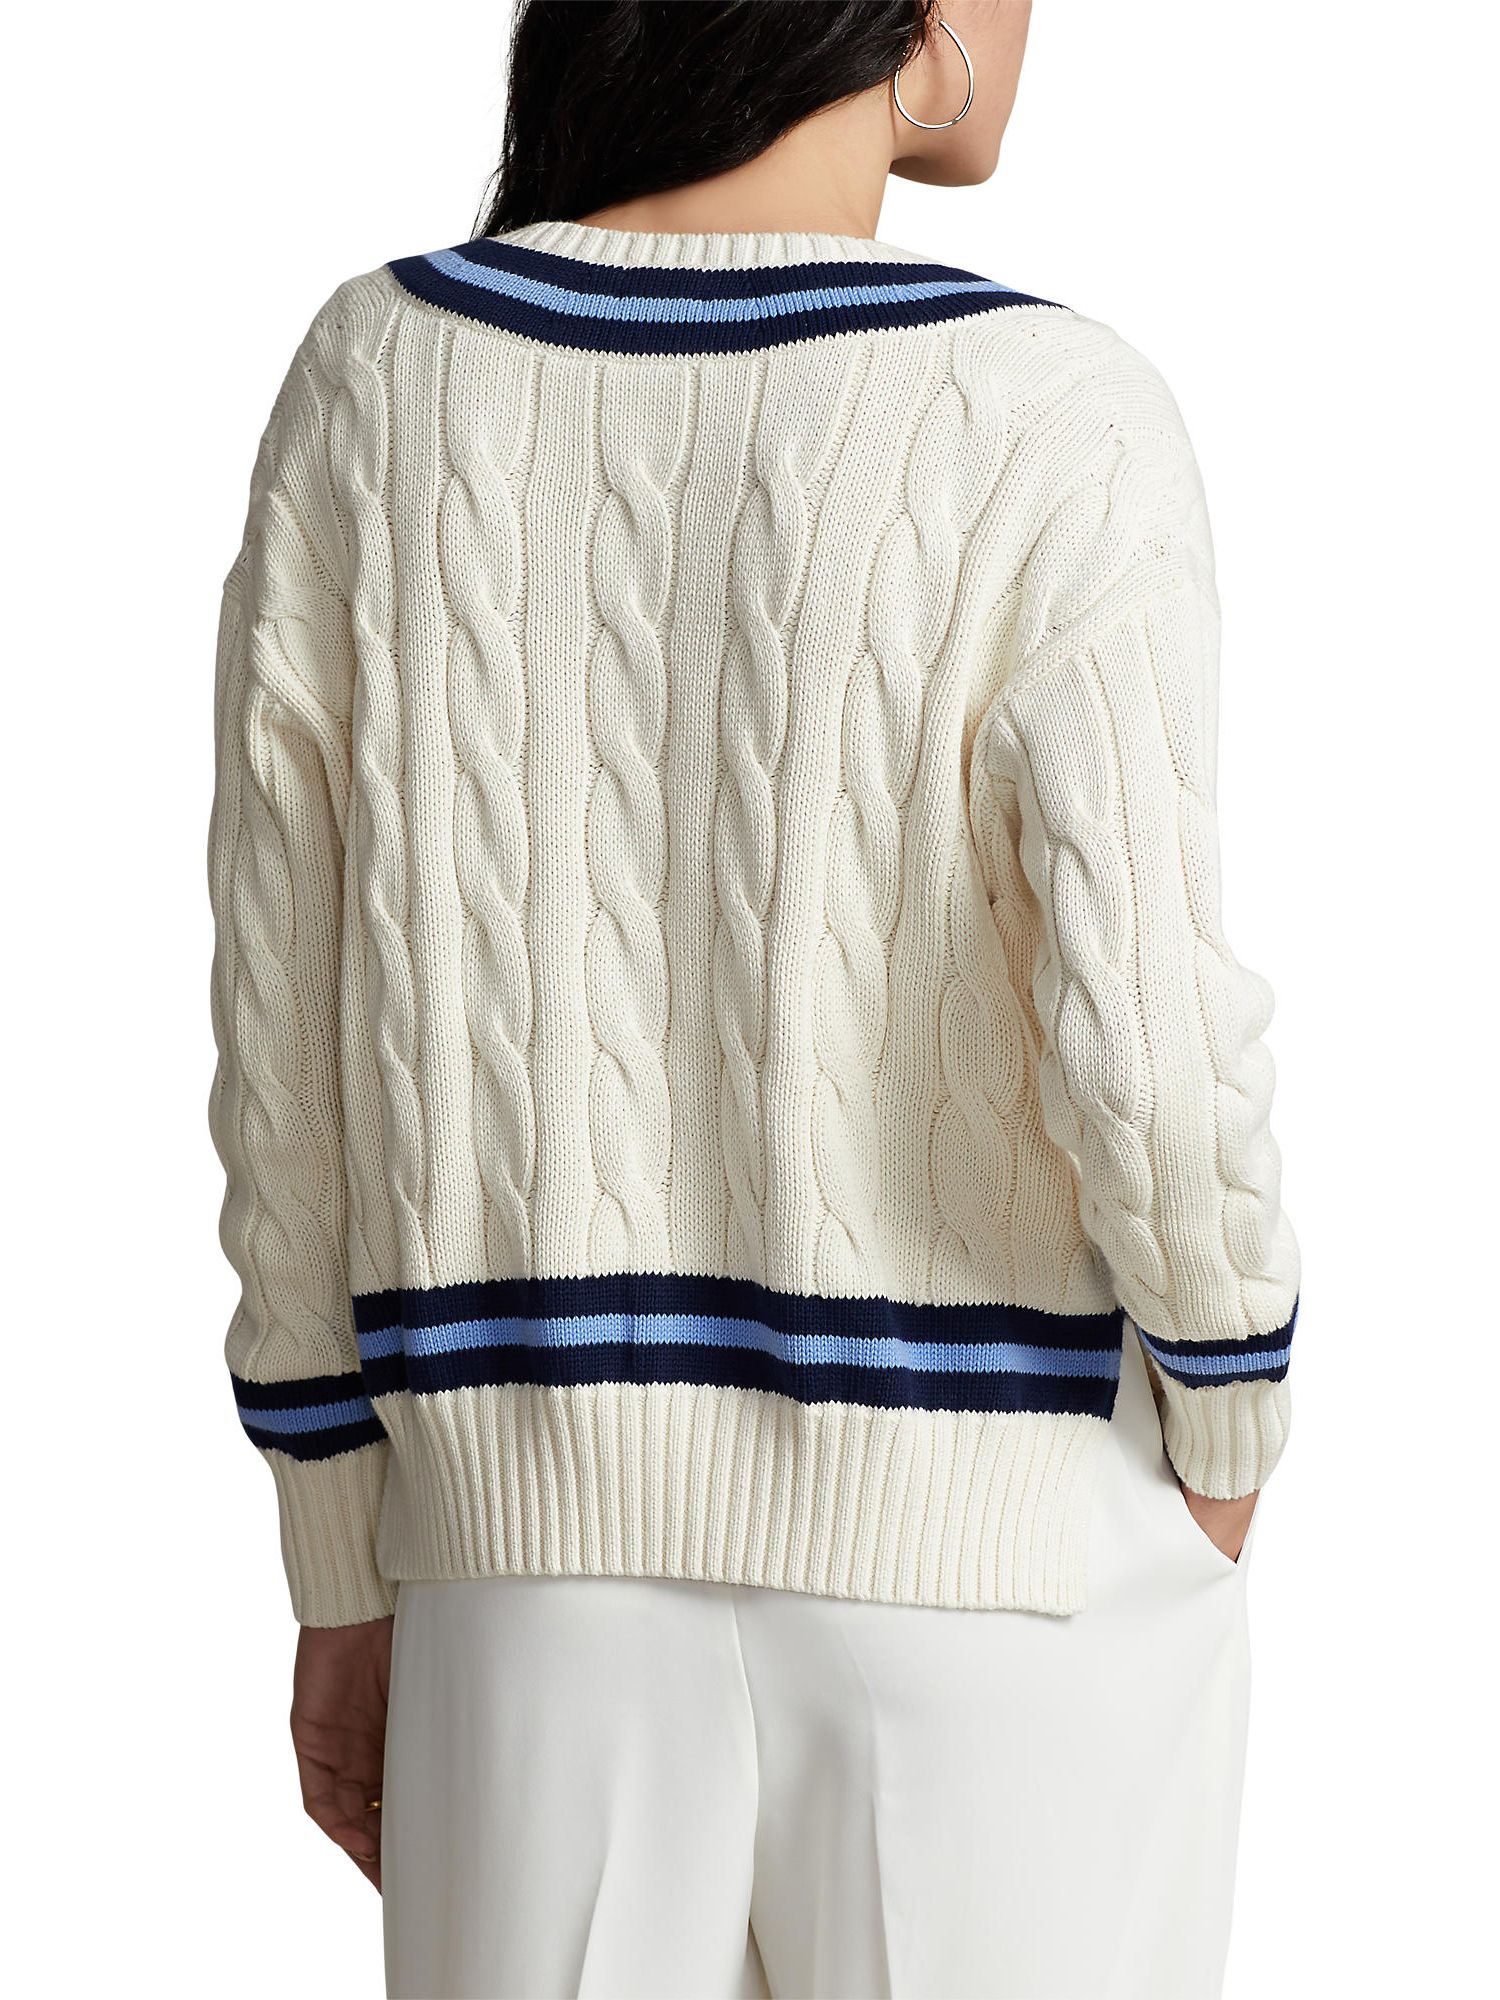 Buy Ralph Lauren Cricket Knit Stripe Jumper, Cream/Navy Online at johnlewis.com